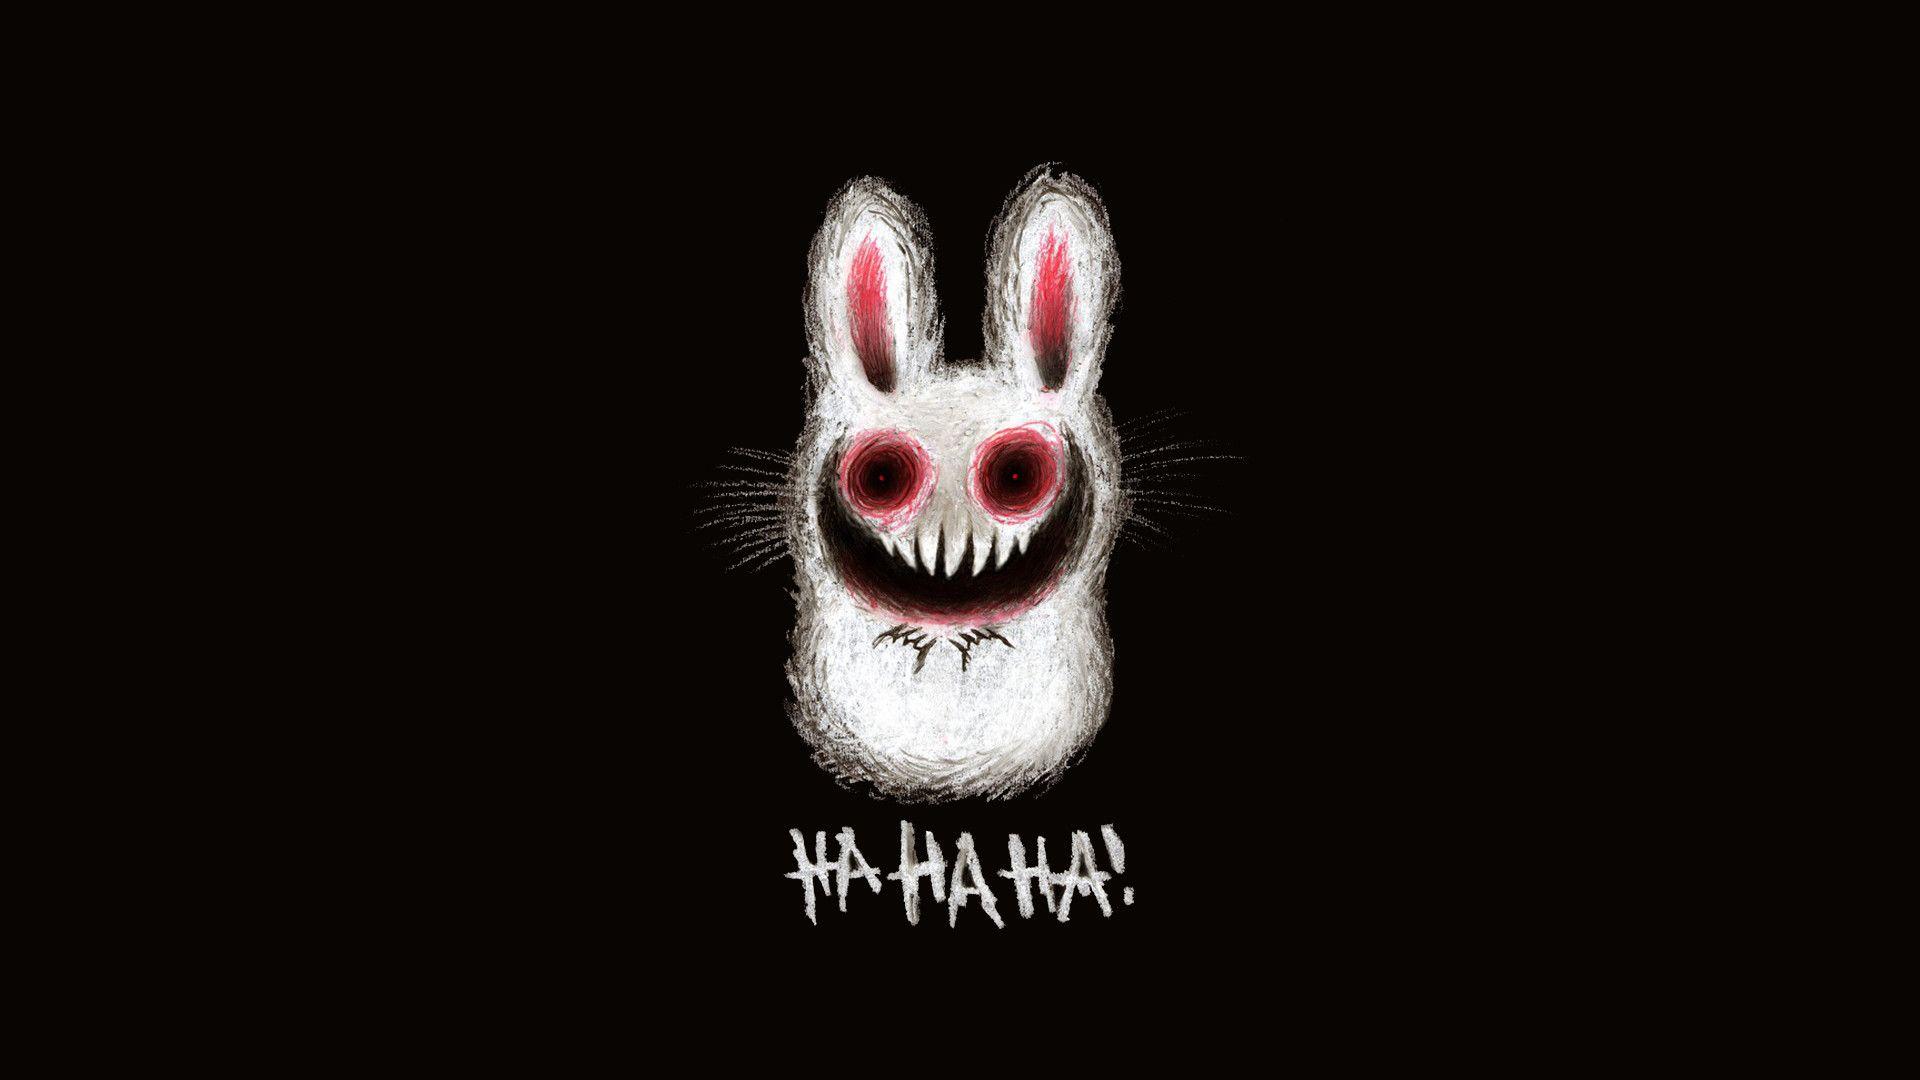 Creepy bunny wallpaper, cute adorable fluffy scary bunny rabbit. Creepy wallpaper, Scary wallpaper, Wallpaper creepy